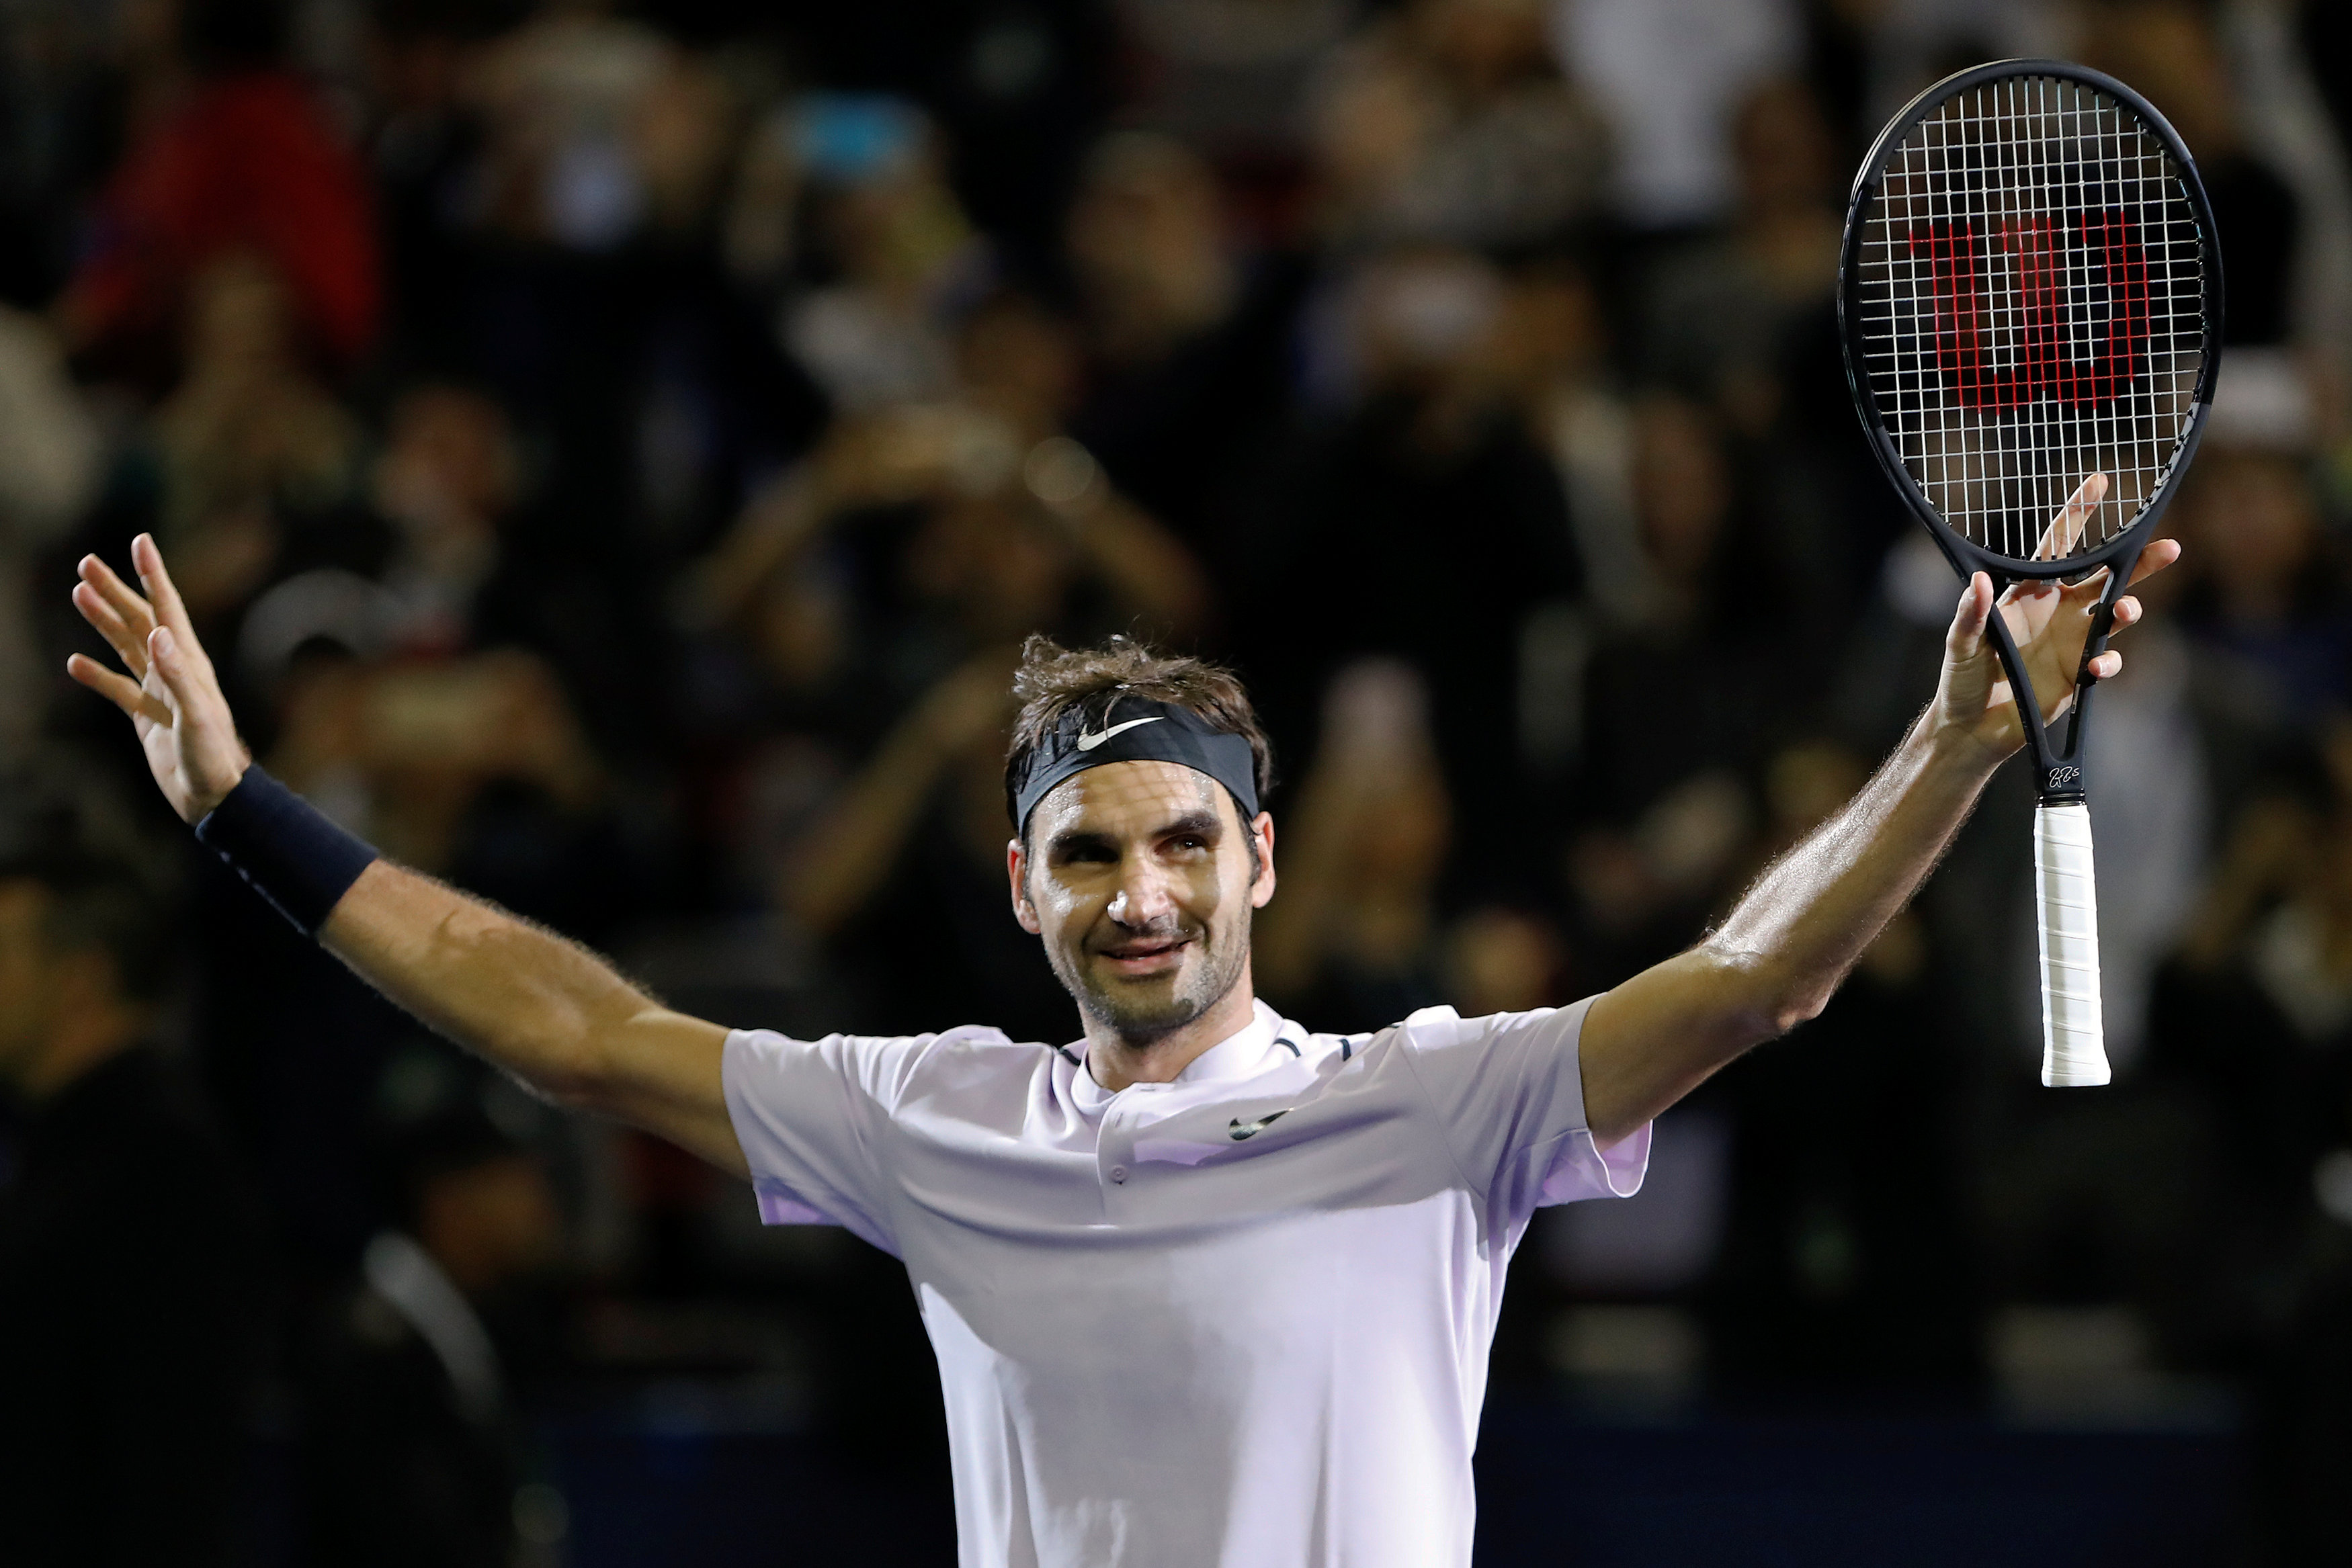 Tennis: Federer targets ATP Finals title, top ranking after Shanghai triumph